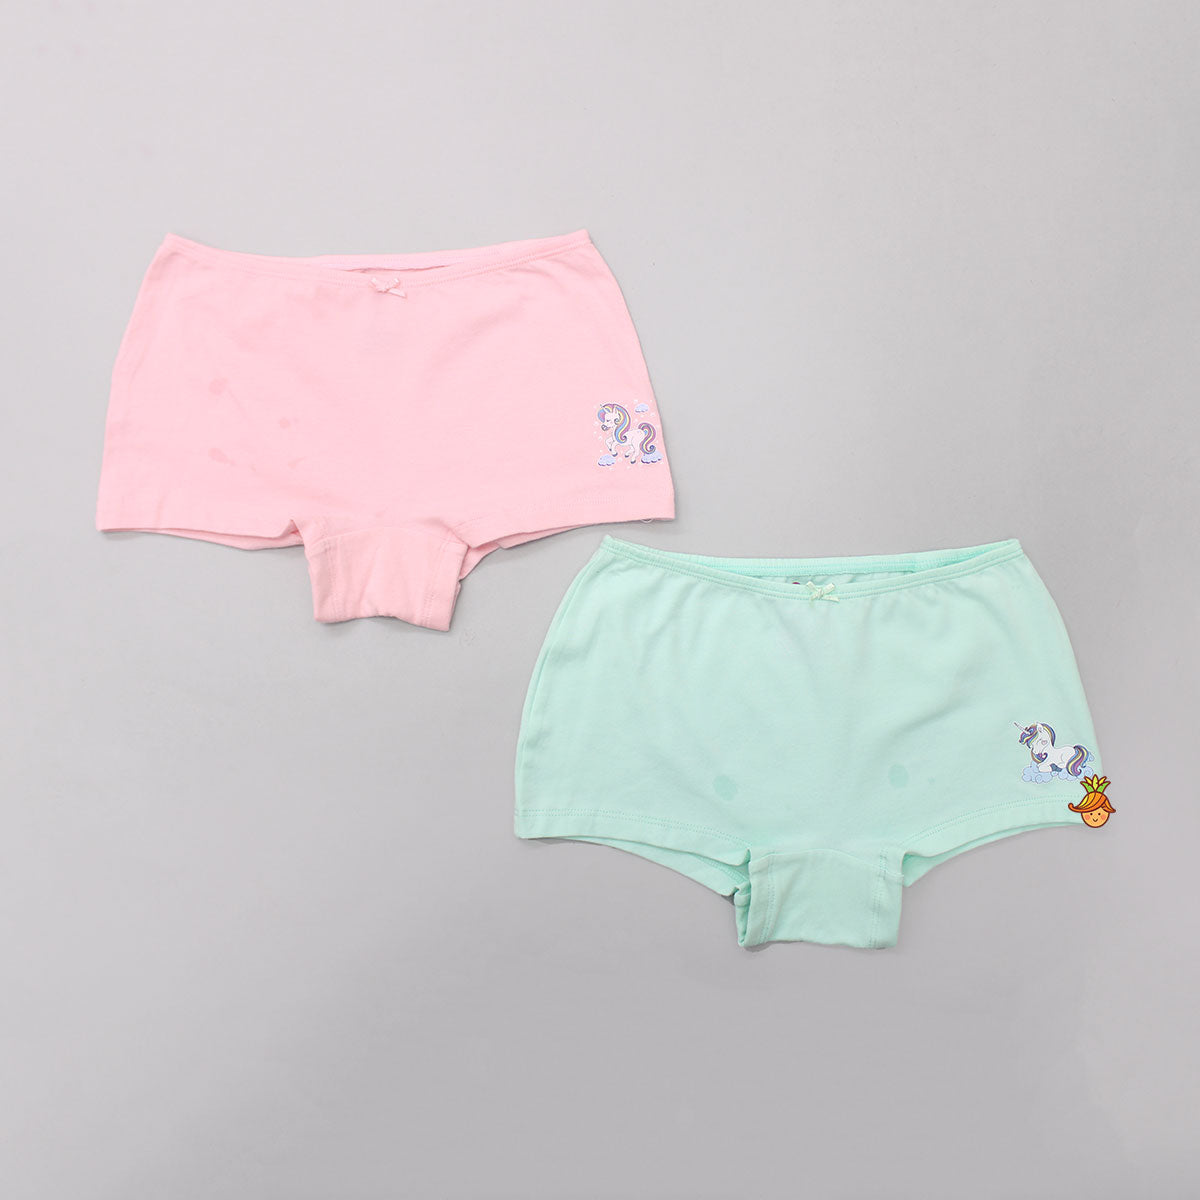 Unicorn Printed Pink And Green Boyshort Panties - Set of 2